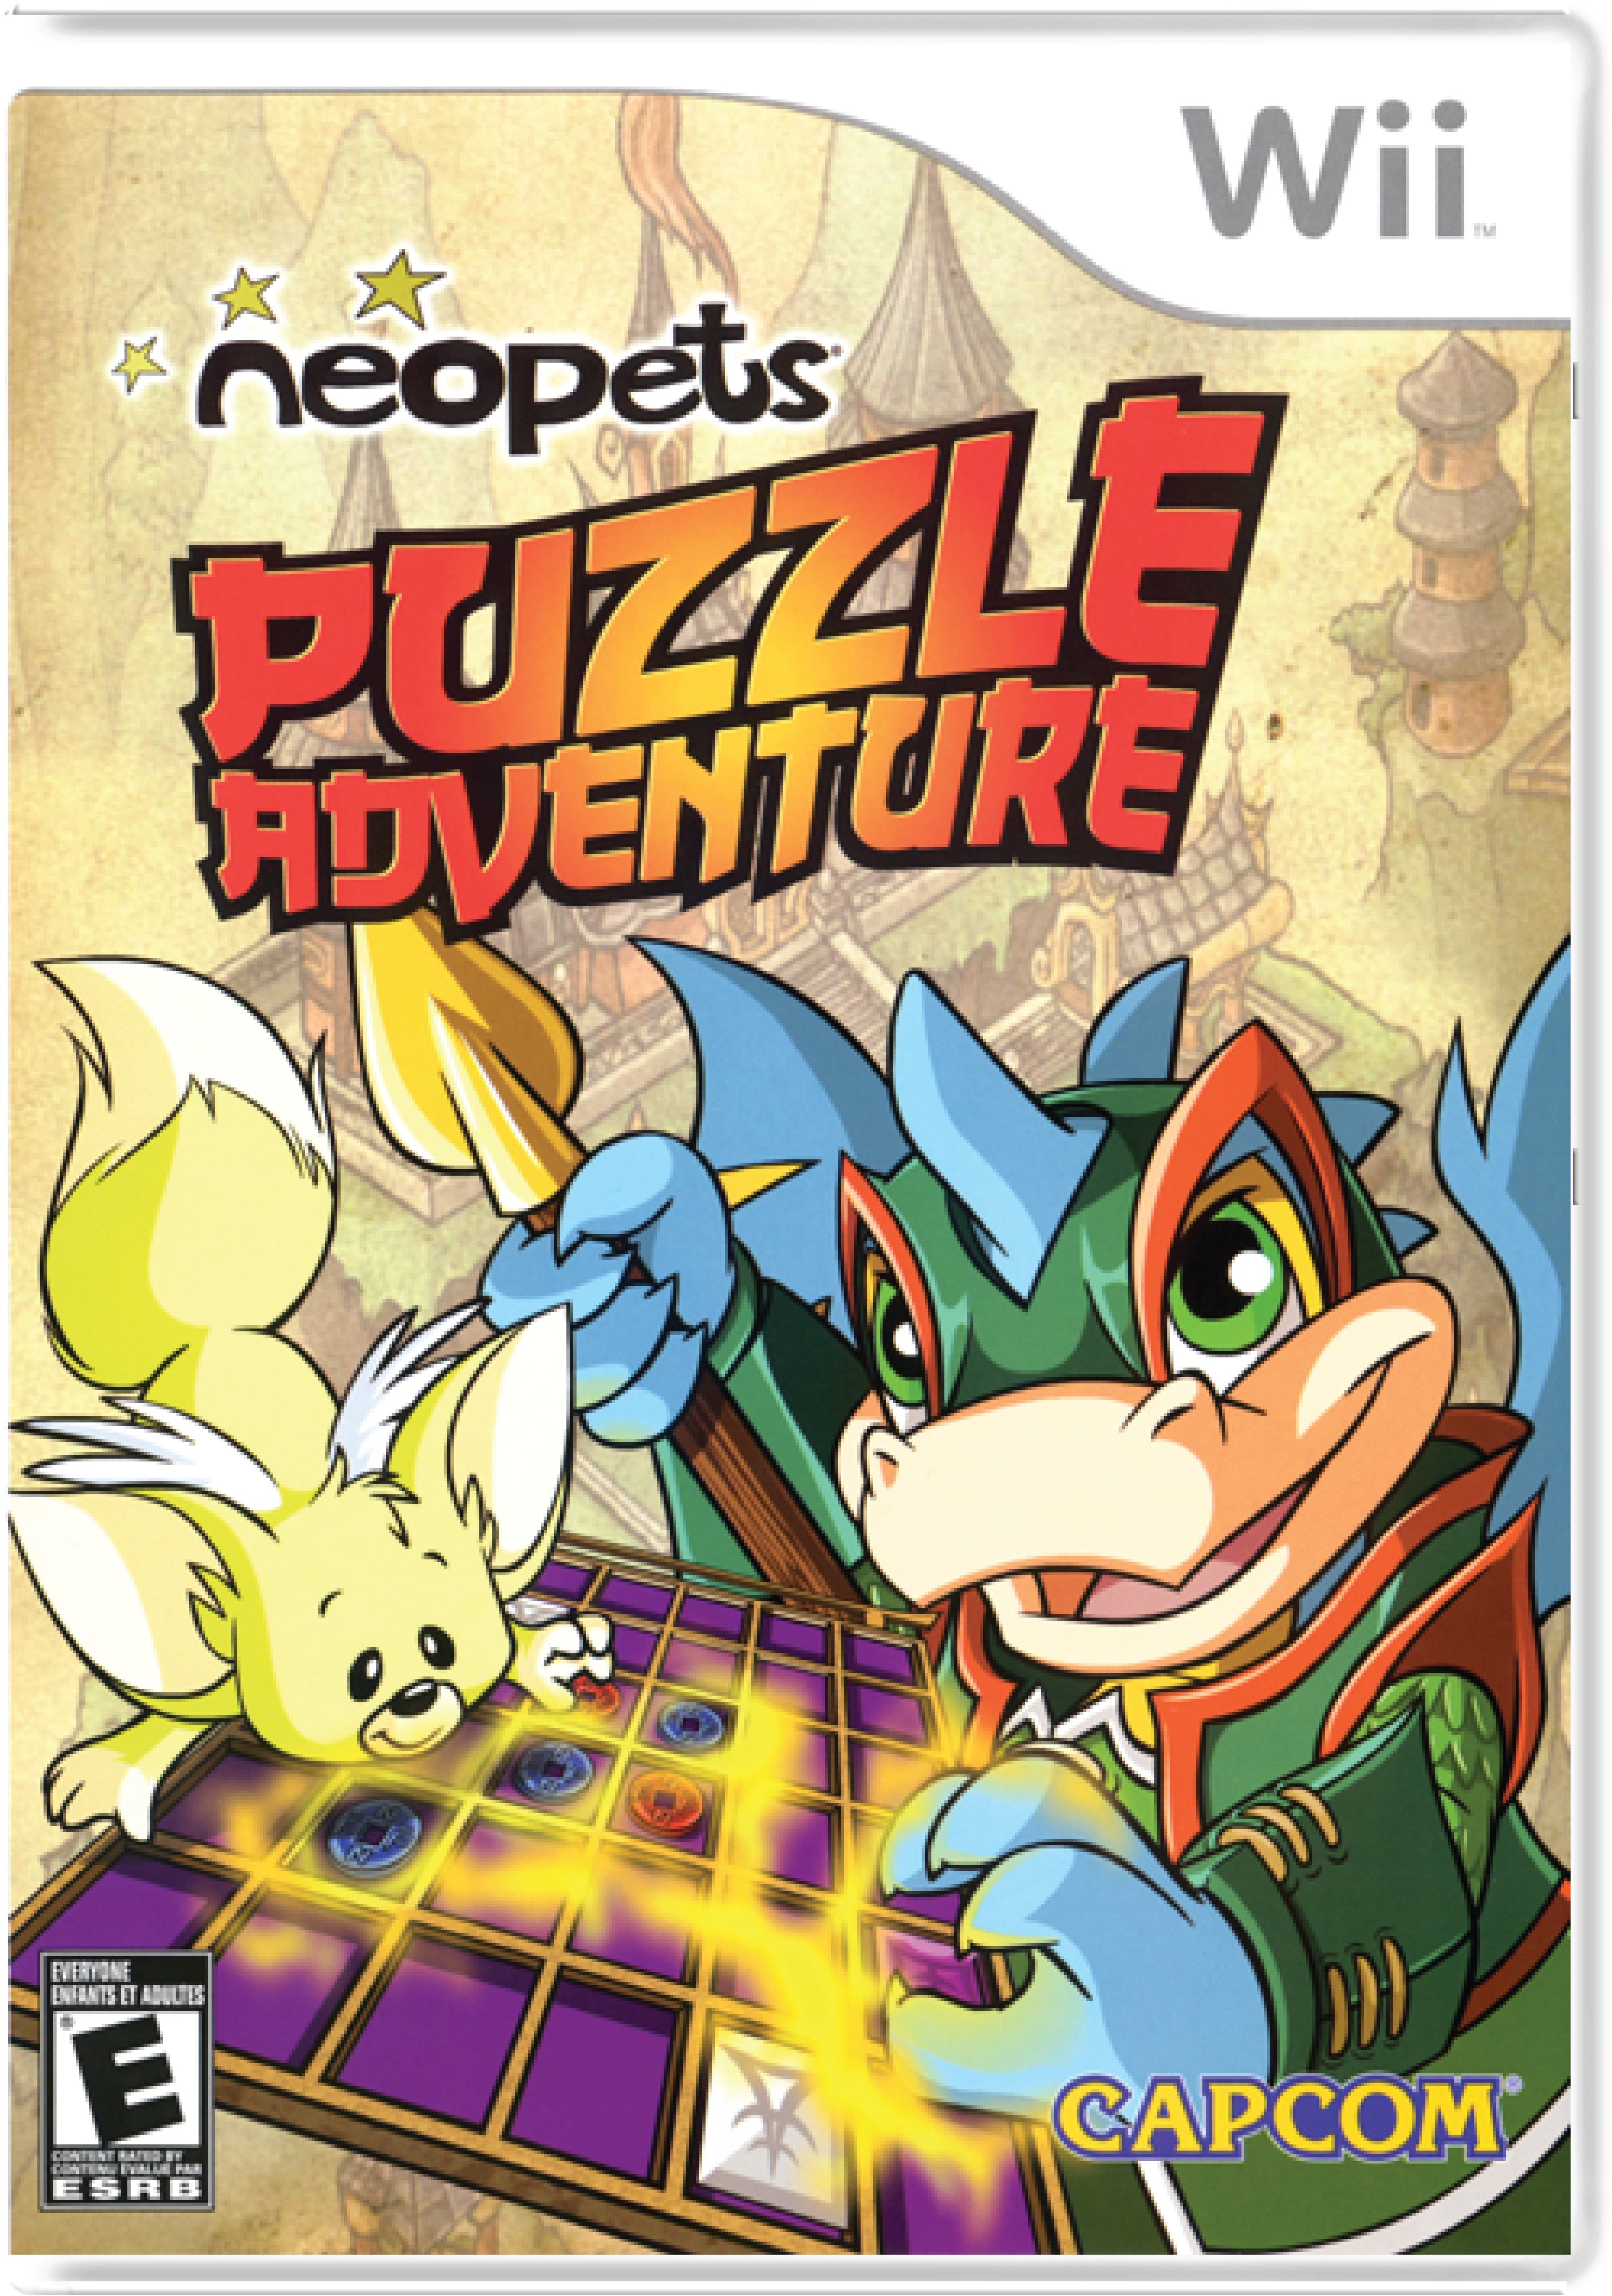 Neopets Puzzle Adventure Cover Art